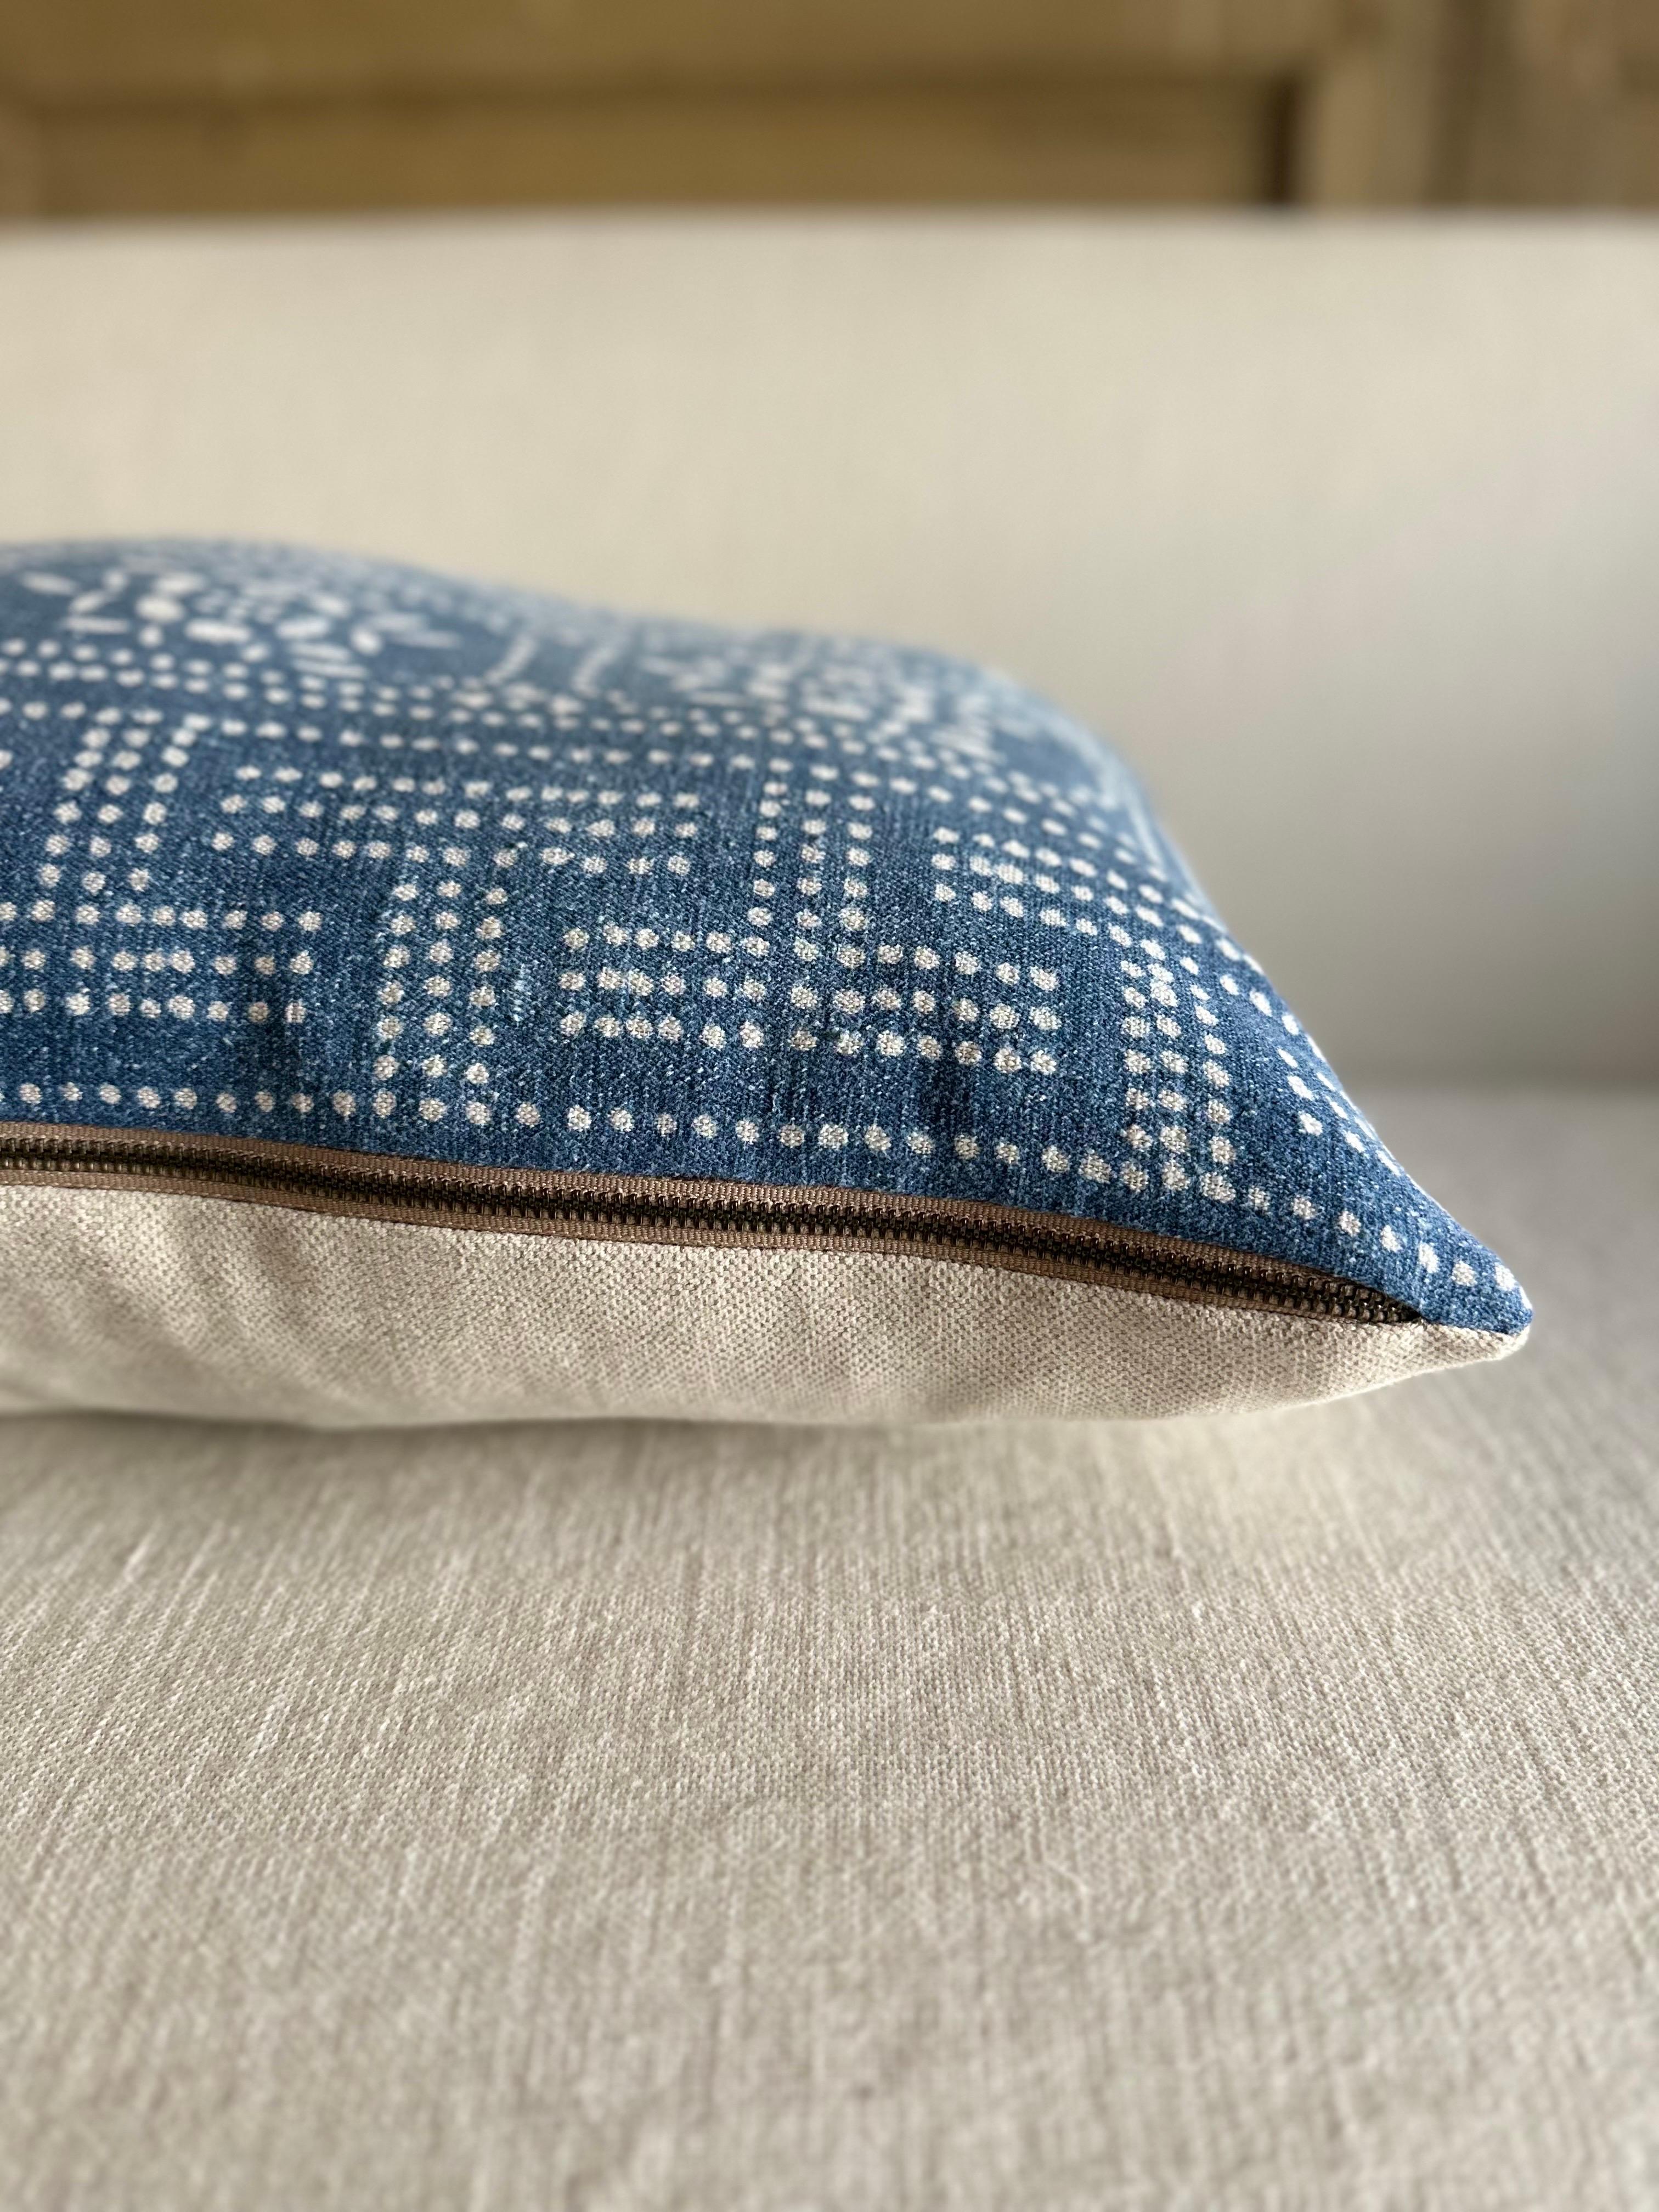 American Denim Blue Batik Style Lumbar Pillow from Vintage Fabric